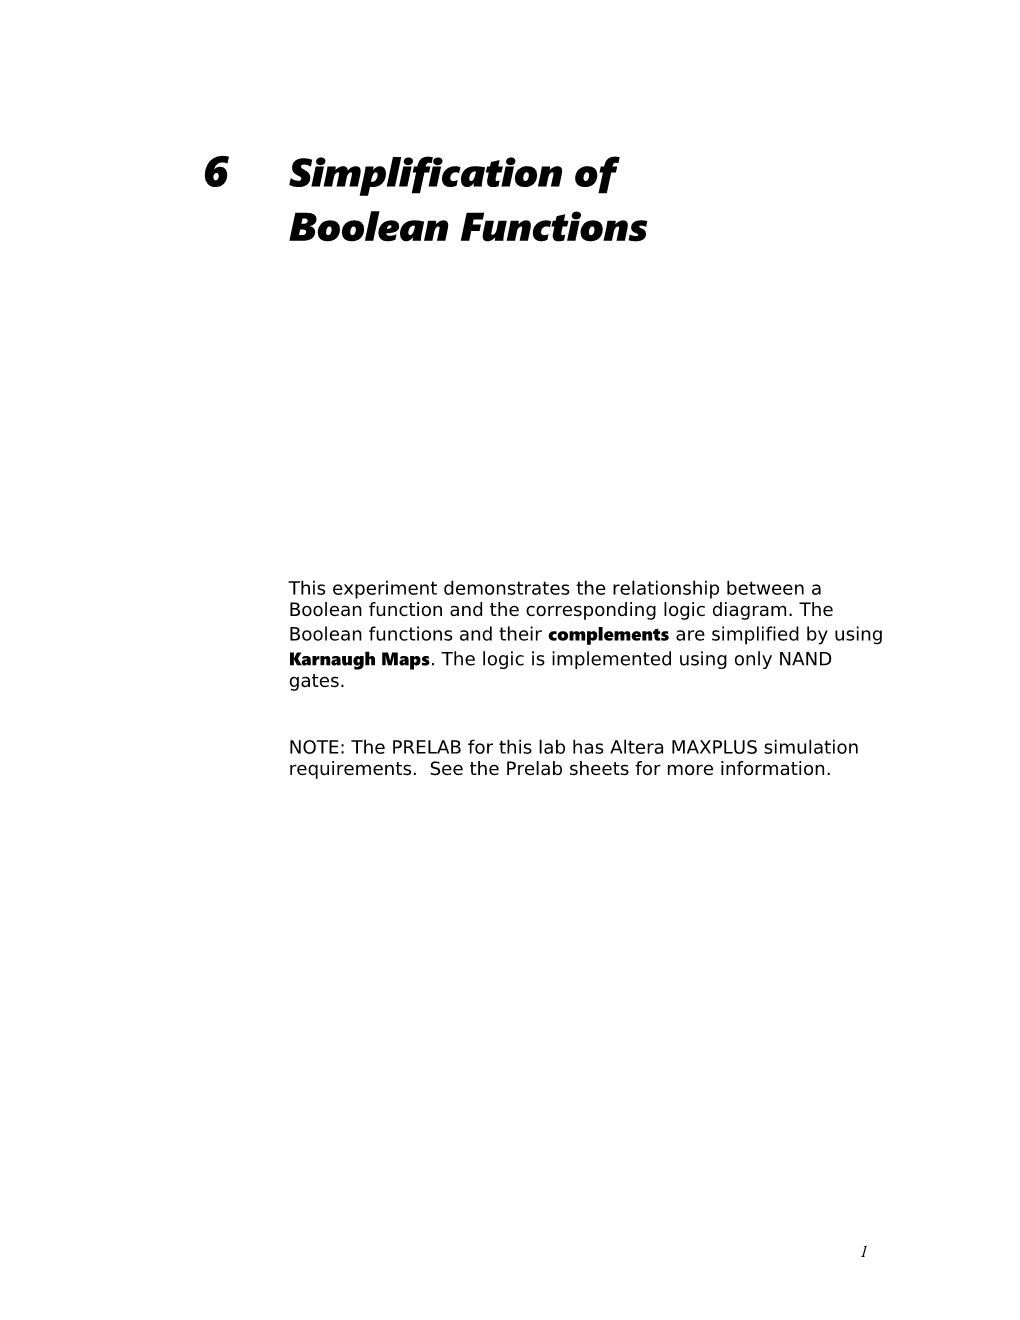 EE 3714Simplification of Boolean Functions